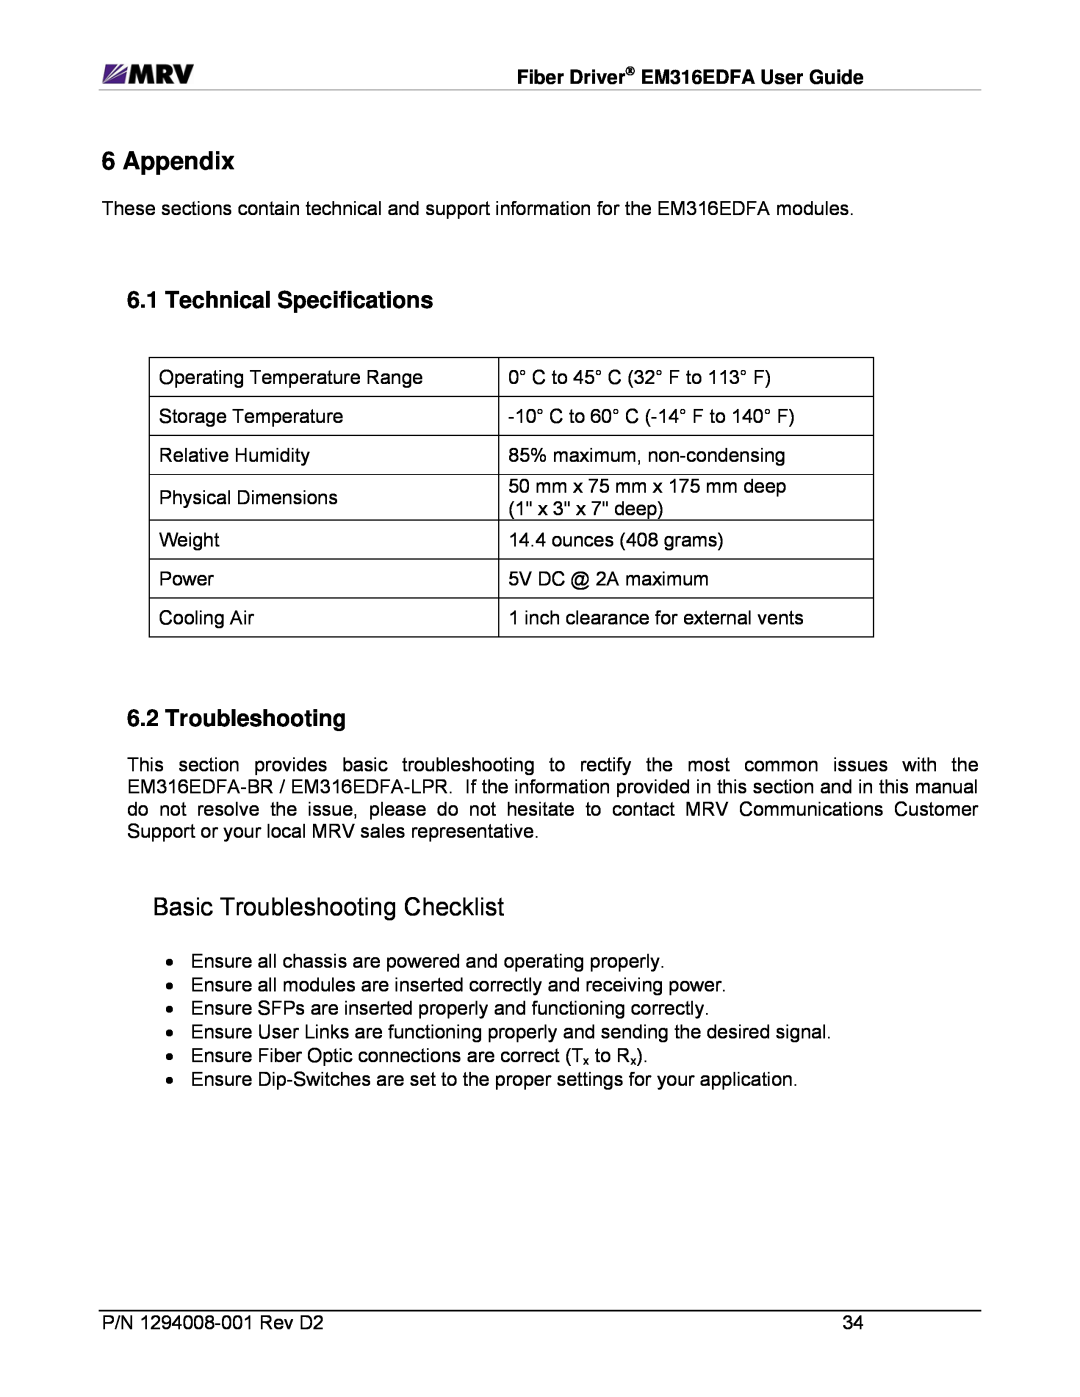 MRV Communications EM316EDFA-LPR, EM316EDFA-BR manual Appendix, Basic Troubleshooting Checklist, Technical Specifications 